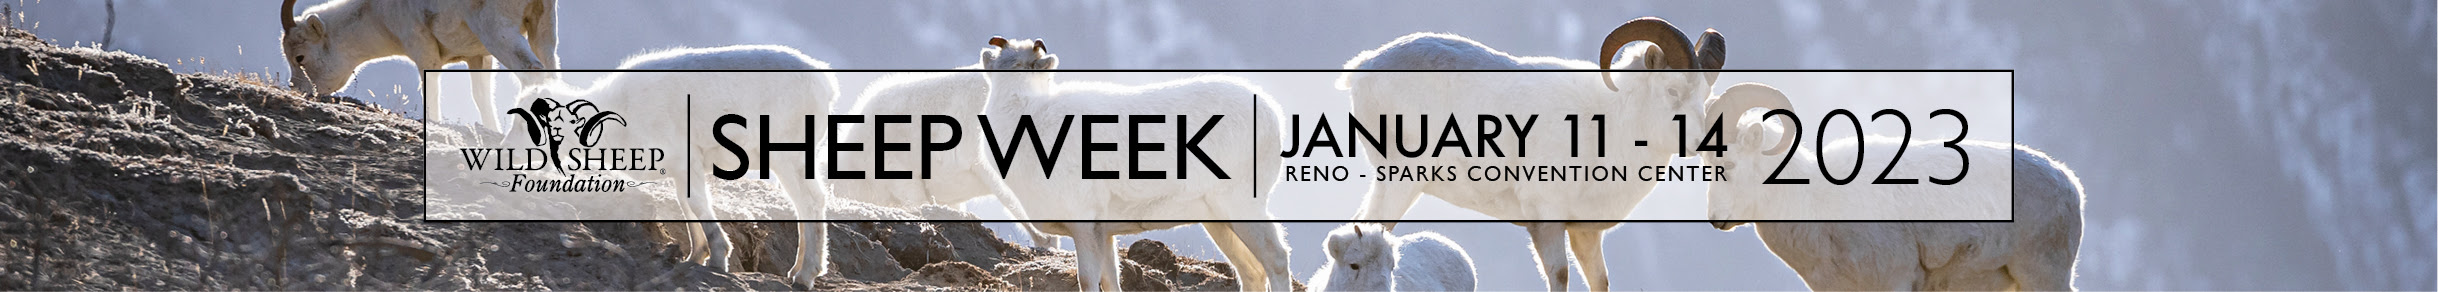 Sheep Week Banner